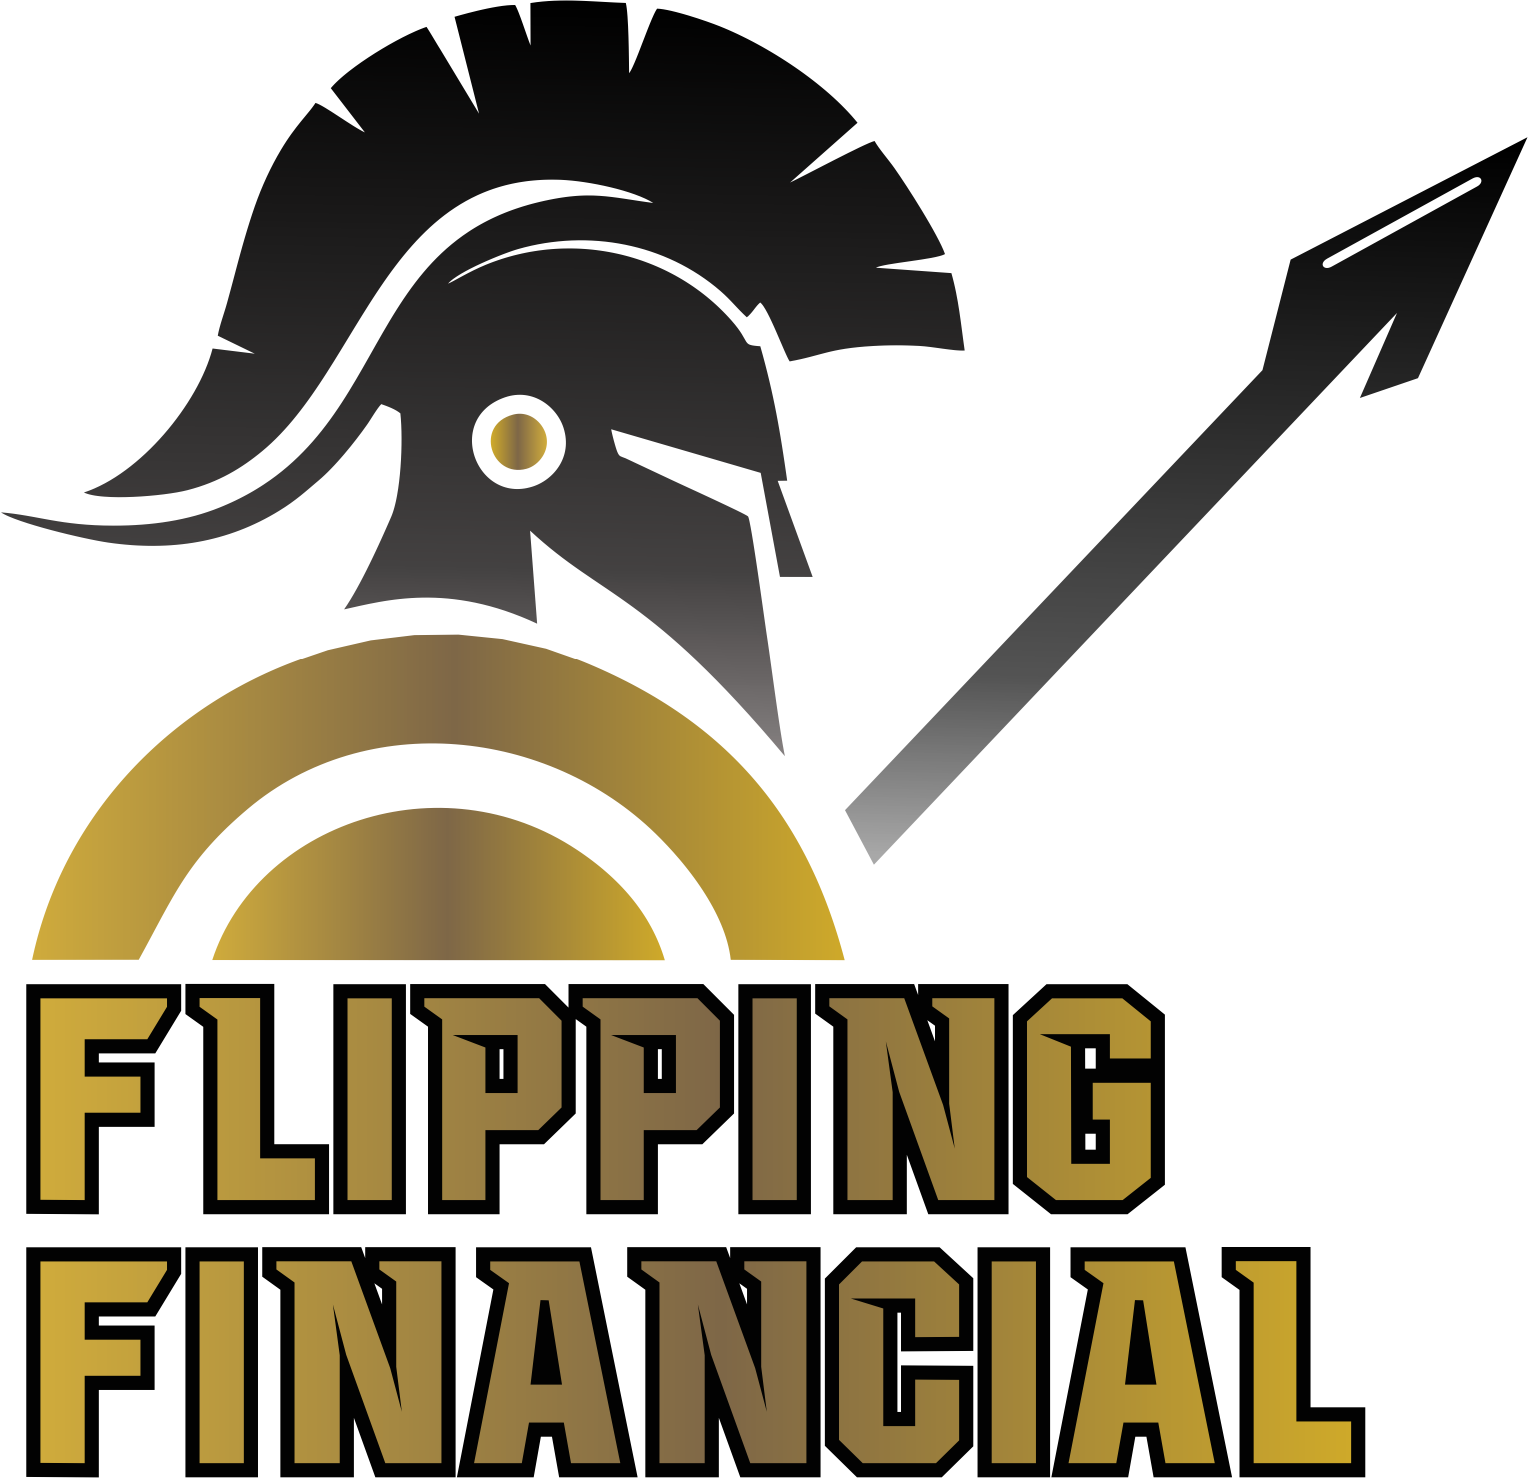 Flipping financial